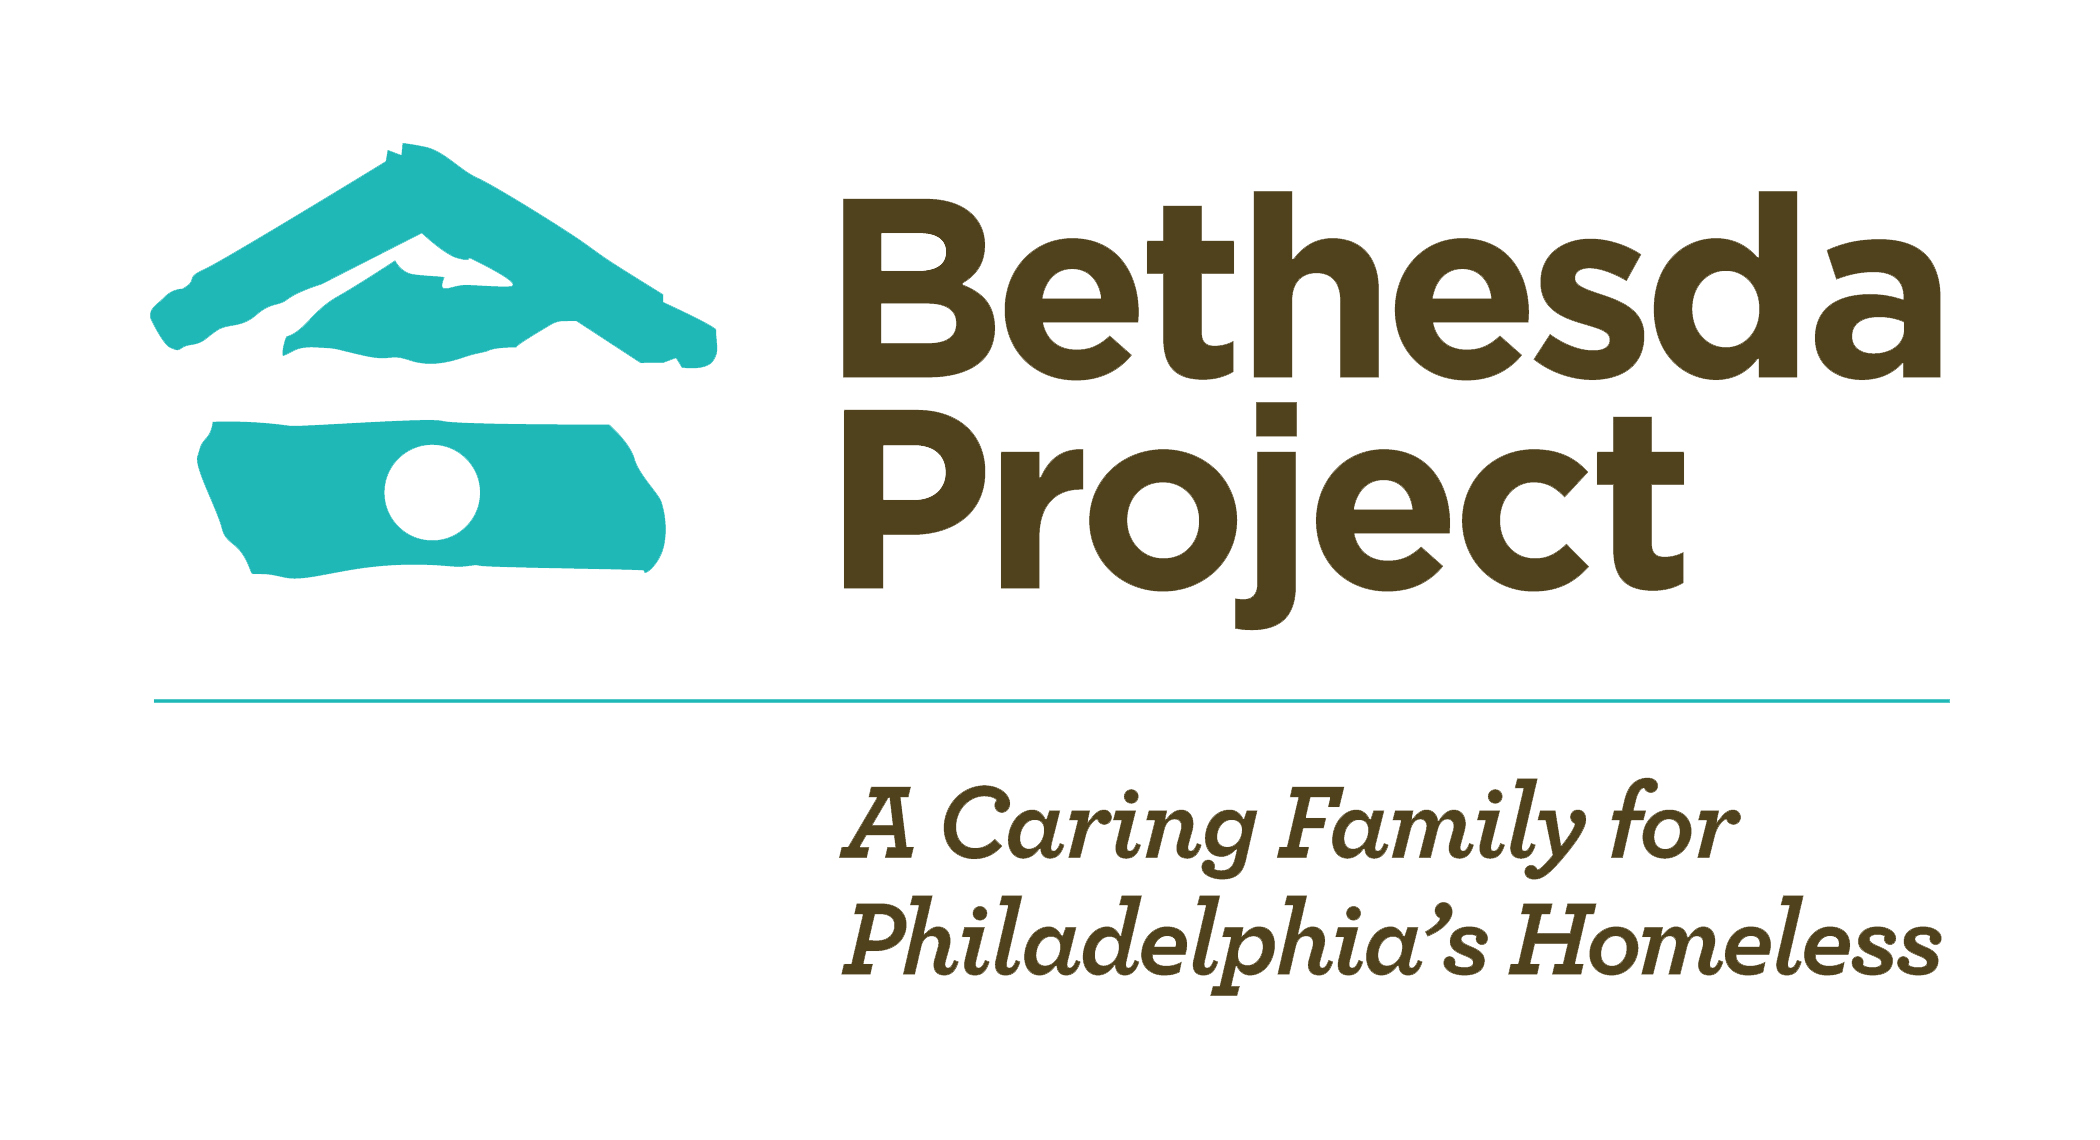 Bethesda Project